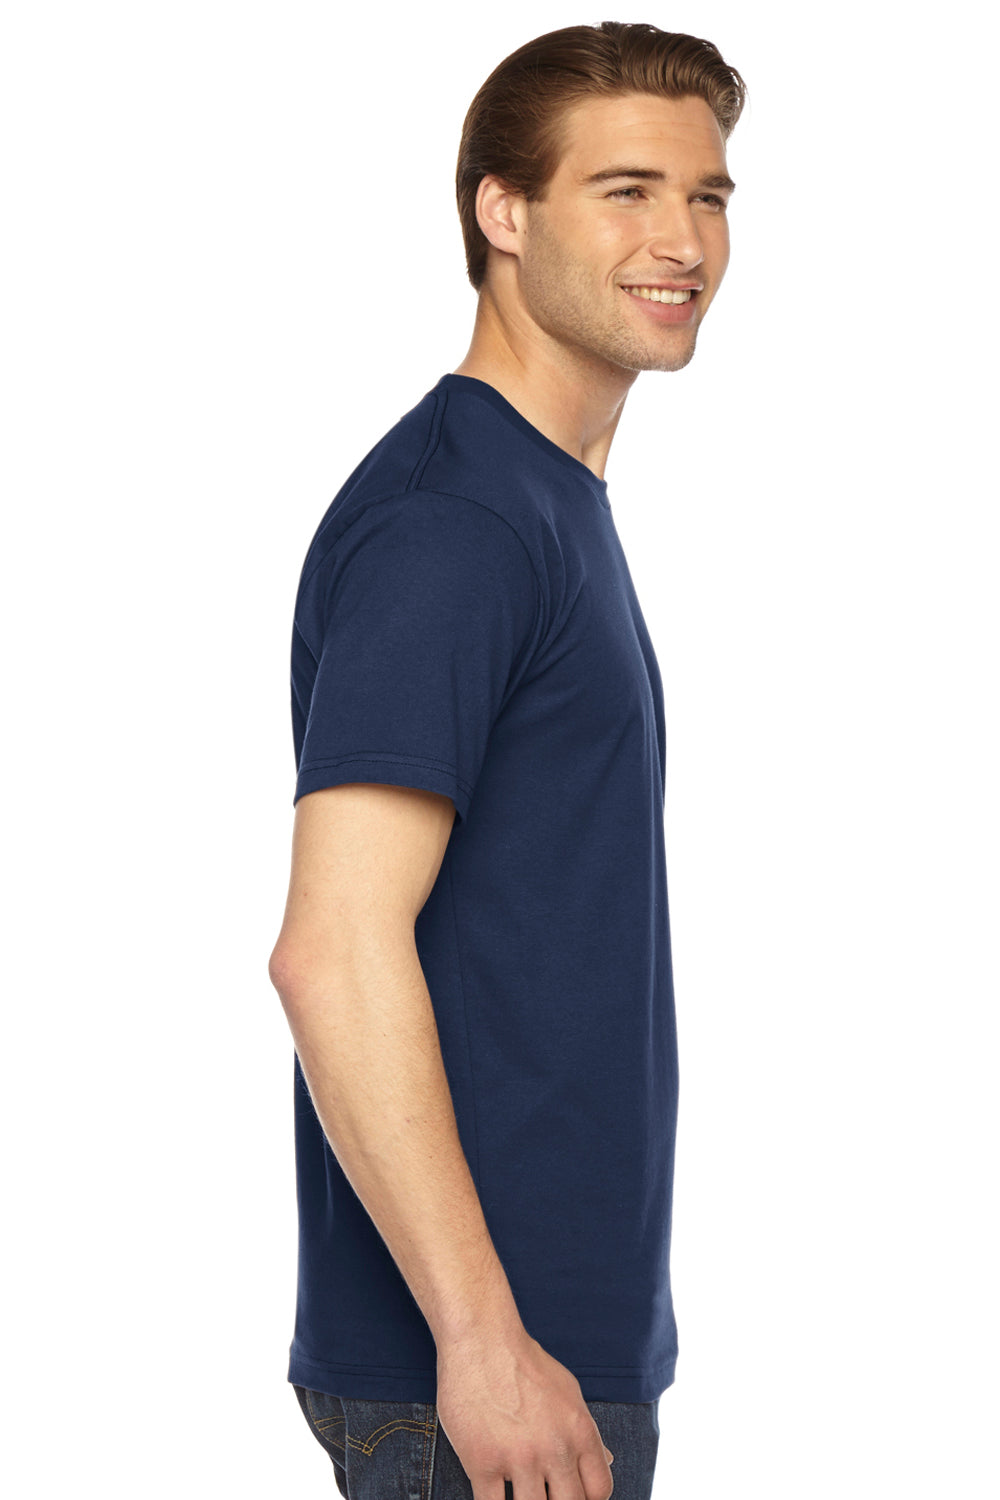 American Apparel 2001 Mens USA Made Fine Jersey Short Sleeve Crewneck T-Shirt Navy Blue Side